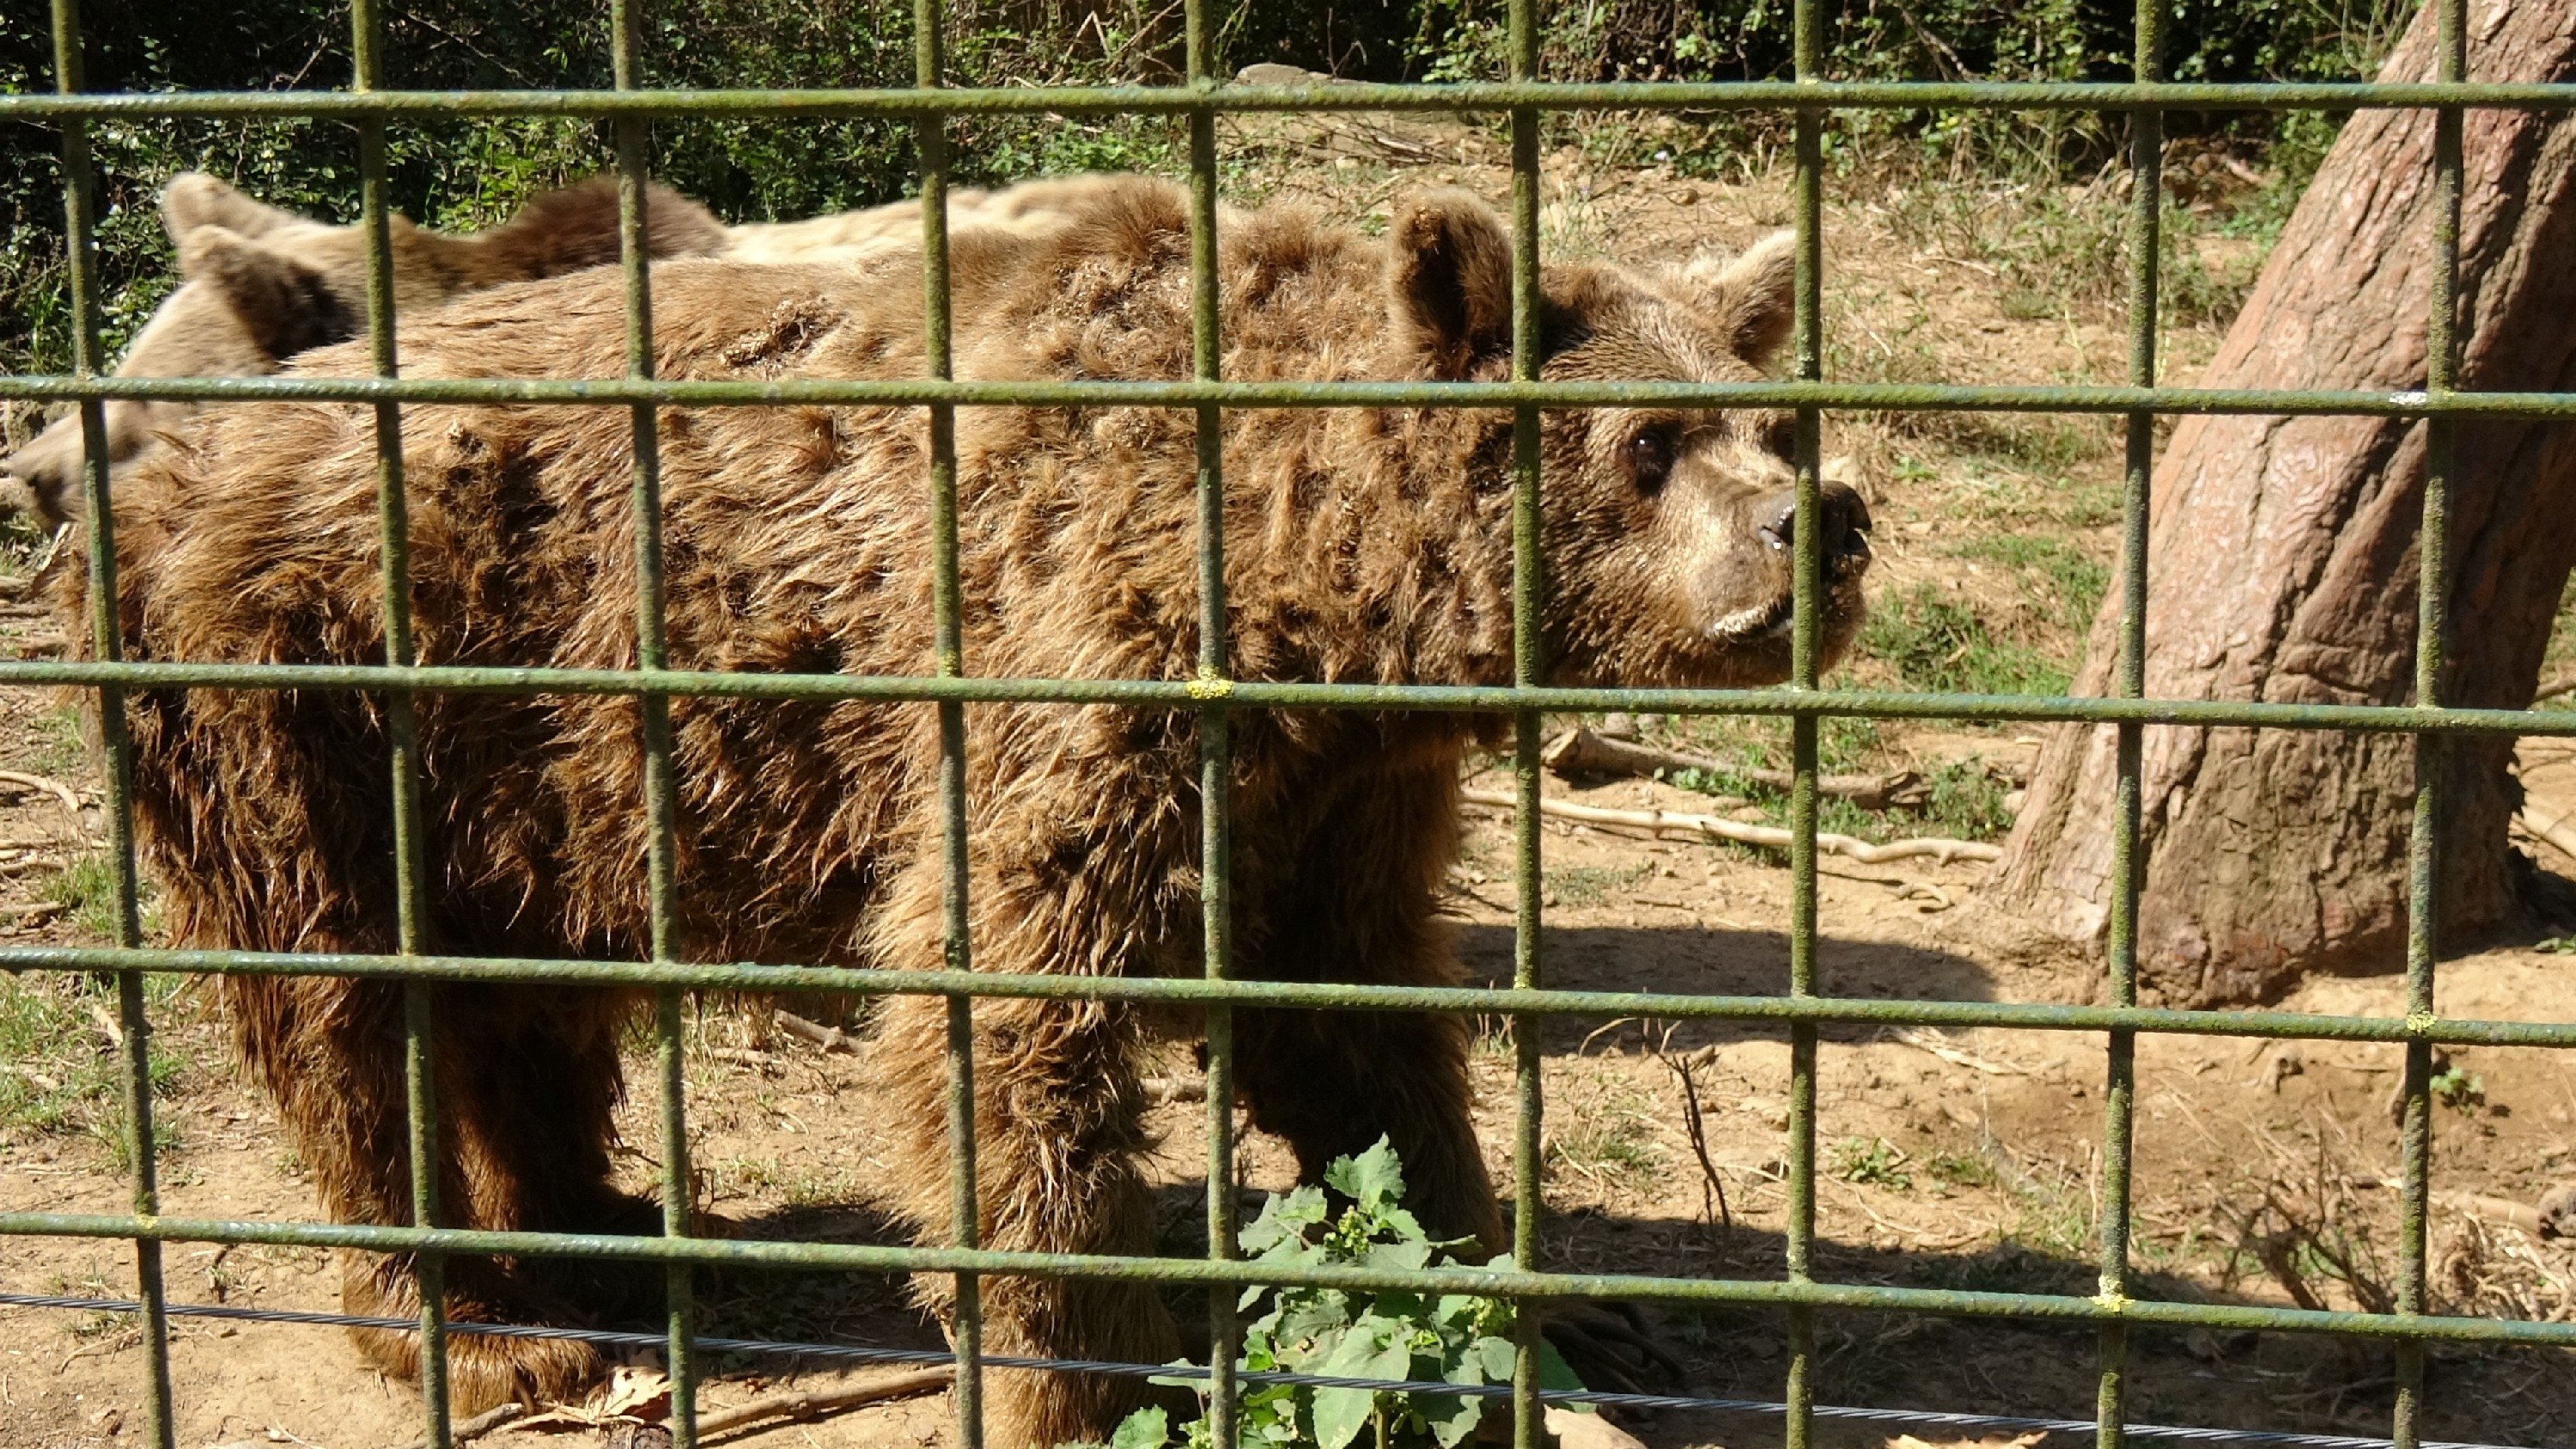 This file photo provided on Nov. 27, 2021 shows bear Brütüs at the animal shelter in Bursa, northwestern Turkey. (DHA Photo)